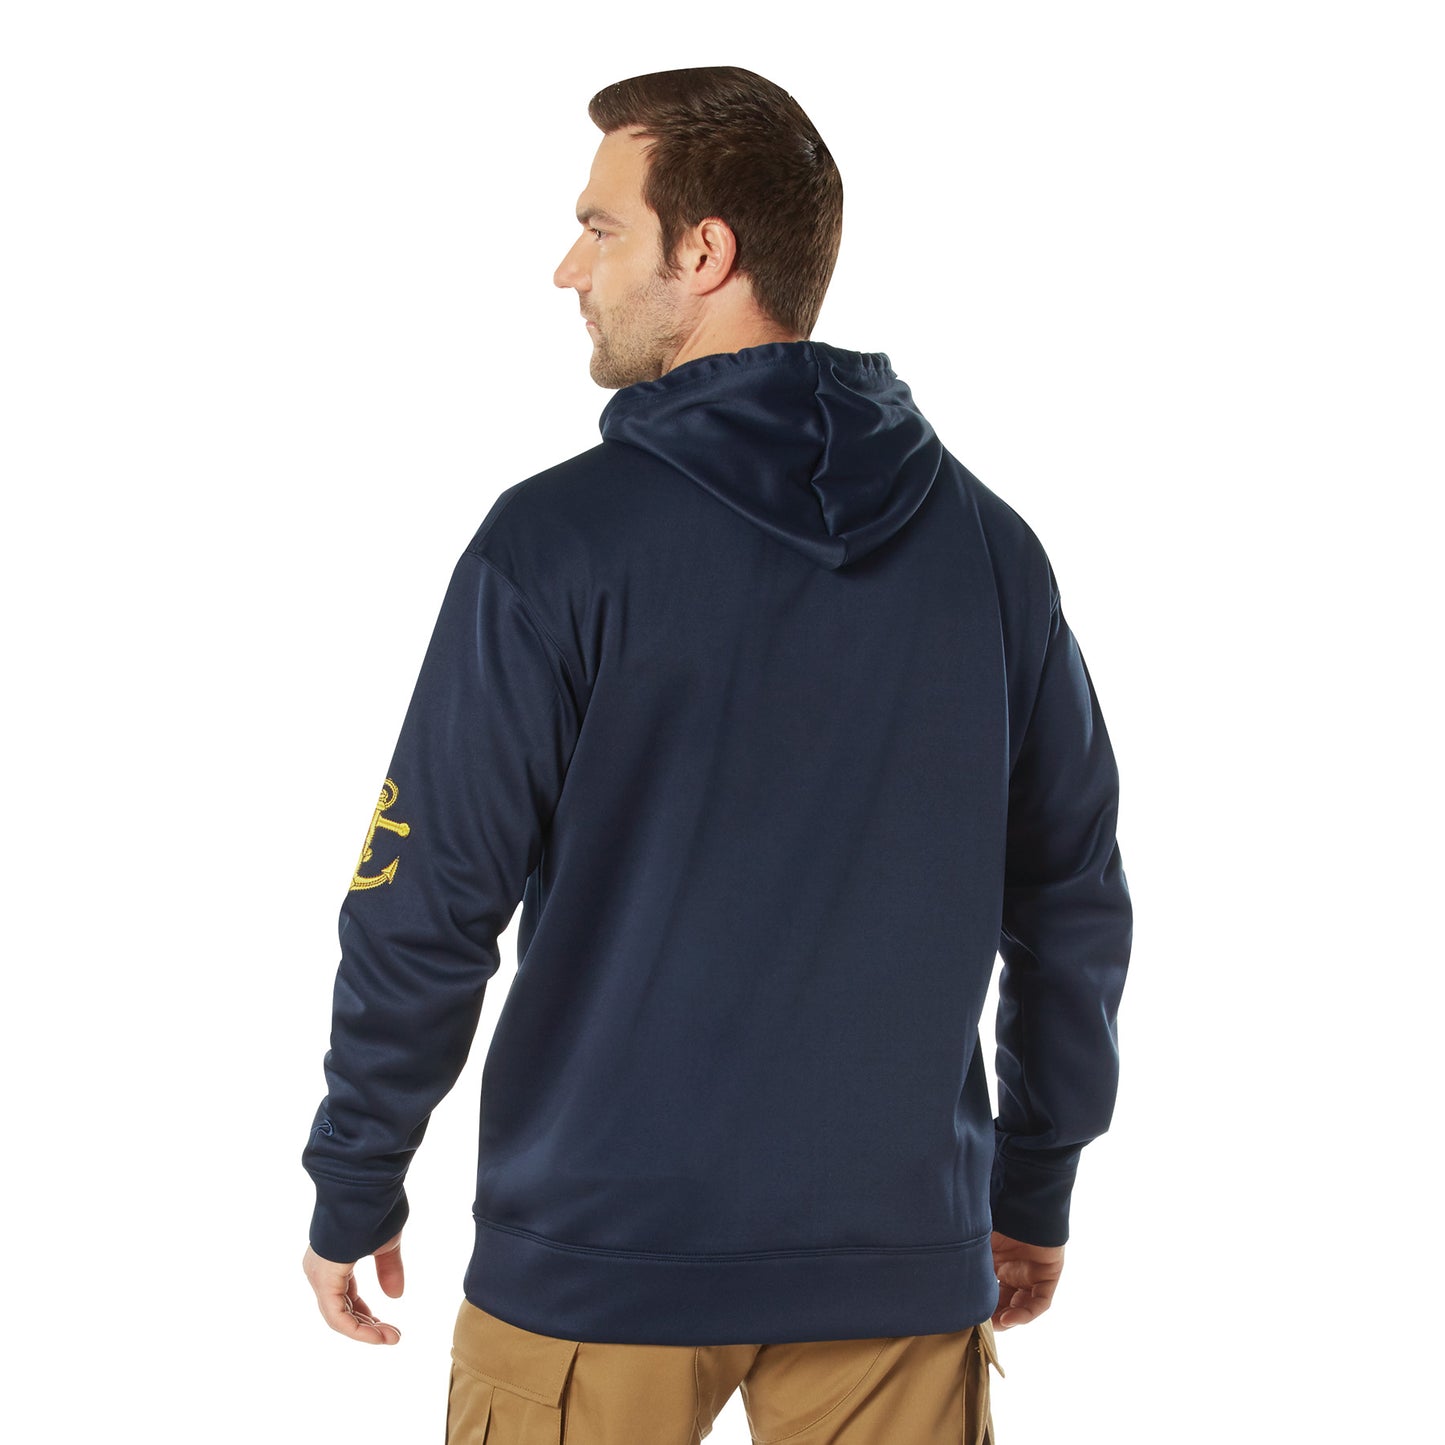 Rothco USN US Navy Emblem Pullover Hooded Sweatshirt